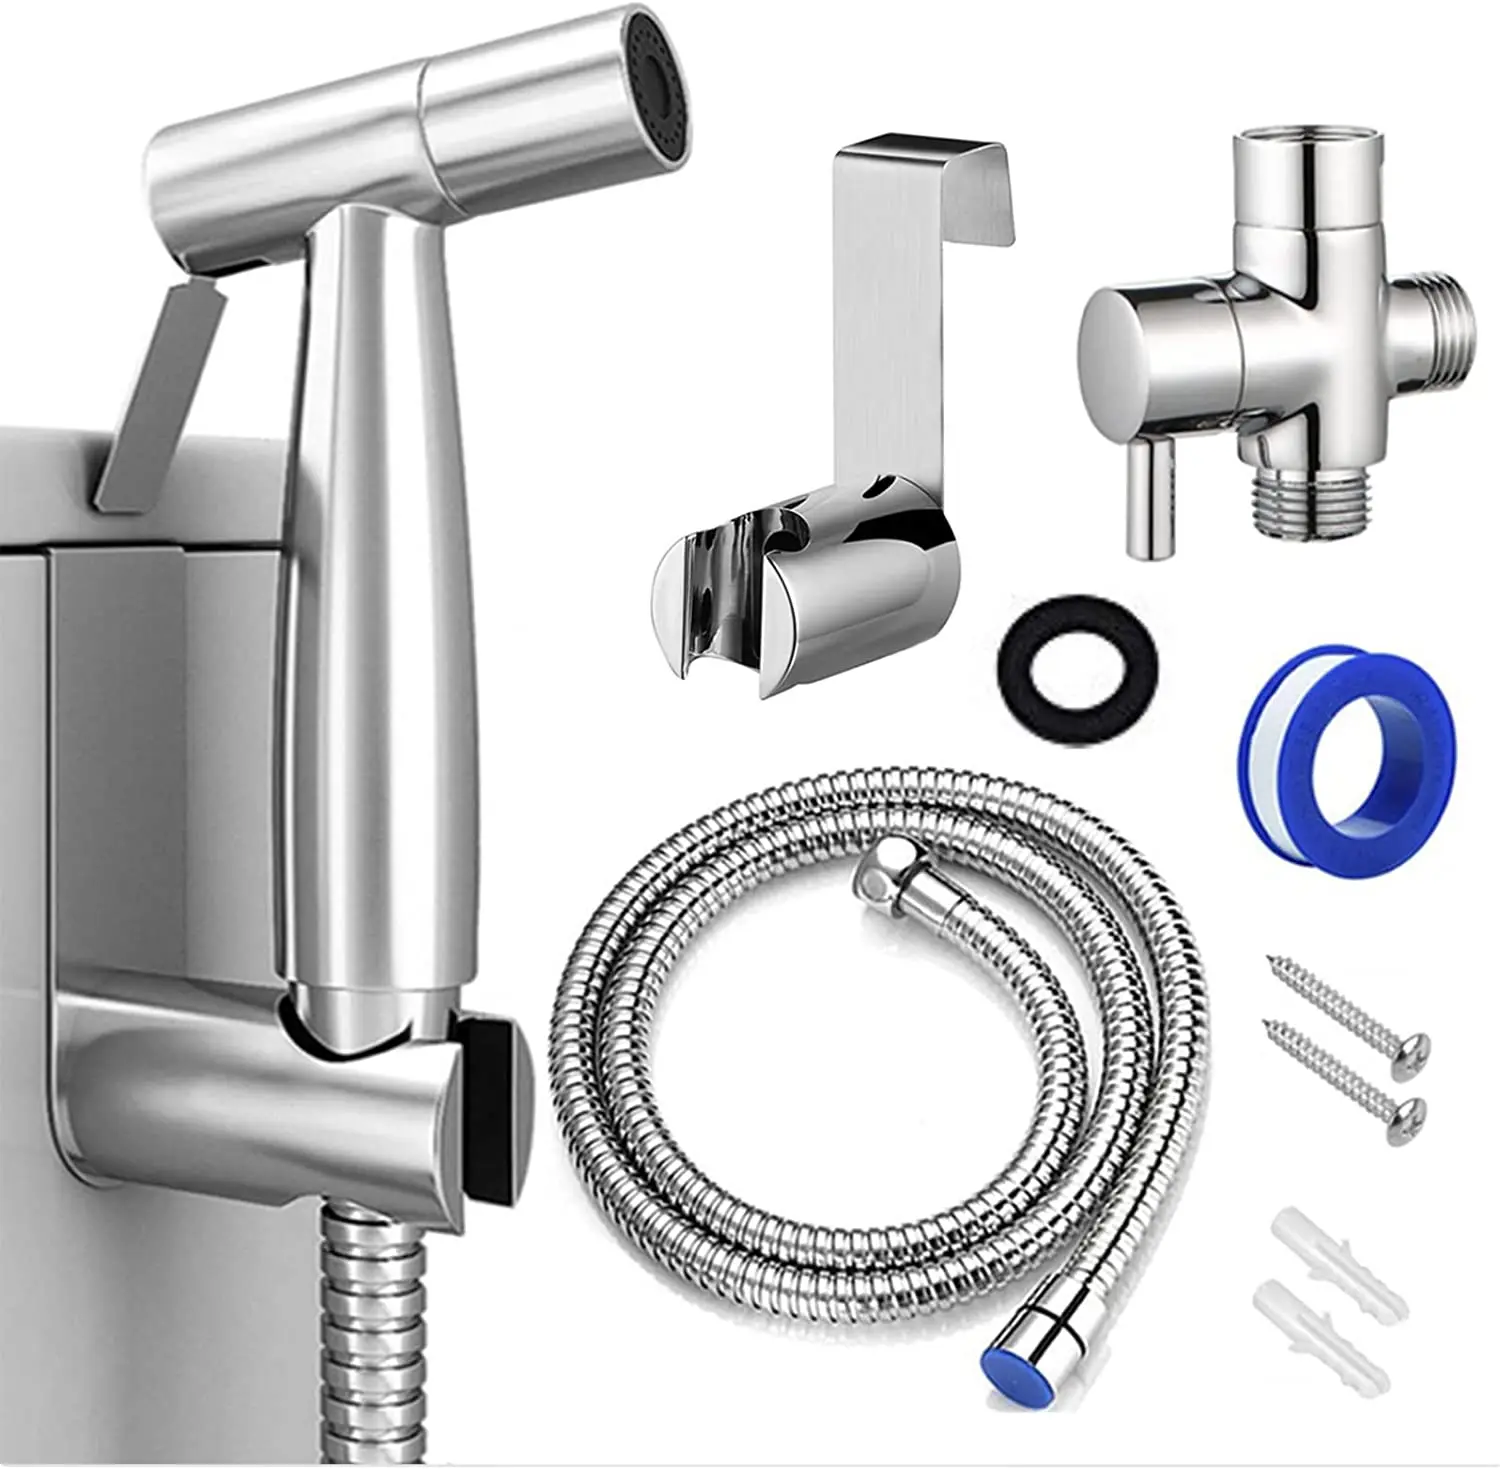 

Bidet Sprayer for Toilet, Handheld Cloth Diaper Sprayer,Bathroom Jet Sprayer Kit Spray Attachment with Hose Great Water Pressure